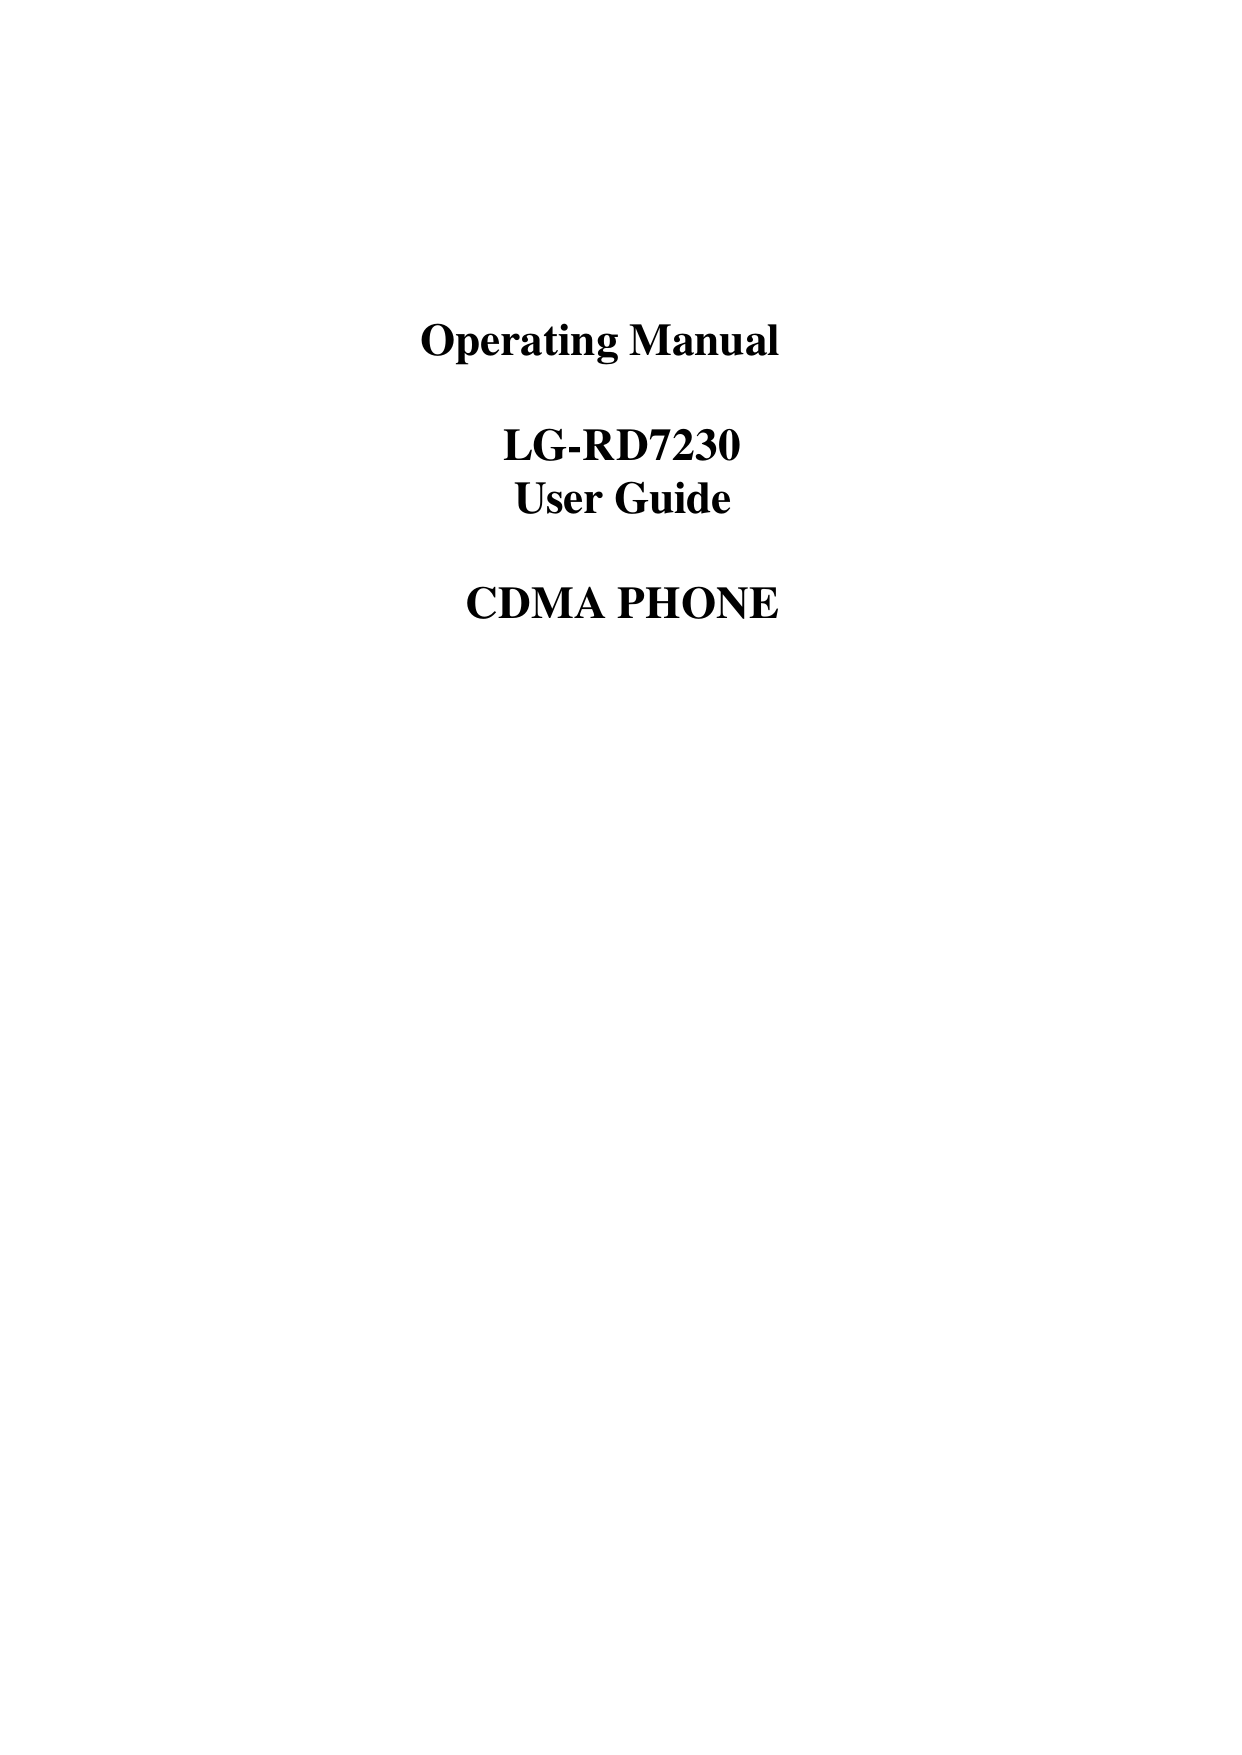   Operating Manual  LG-RD7230 User Guide  CDMA PHONE                          